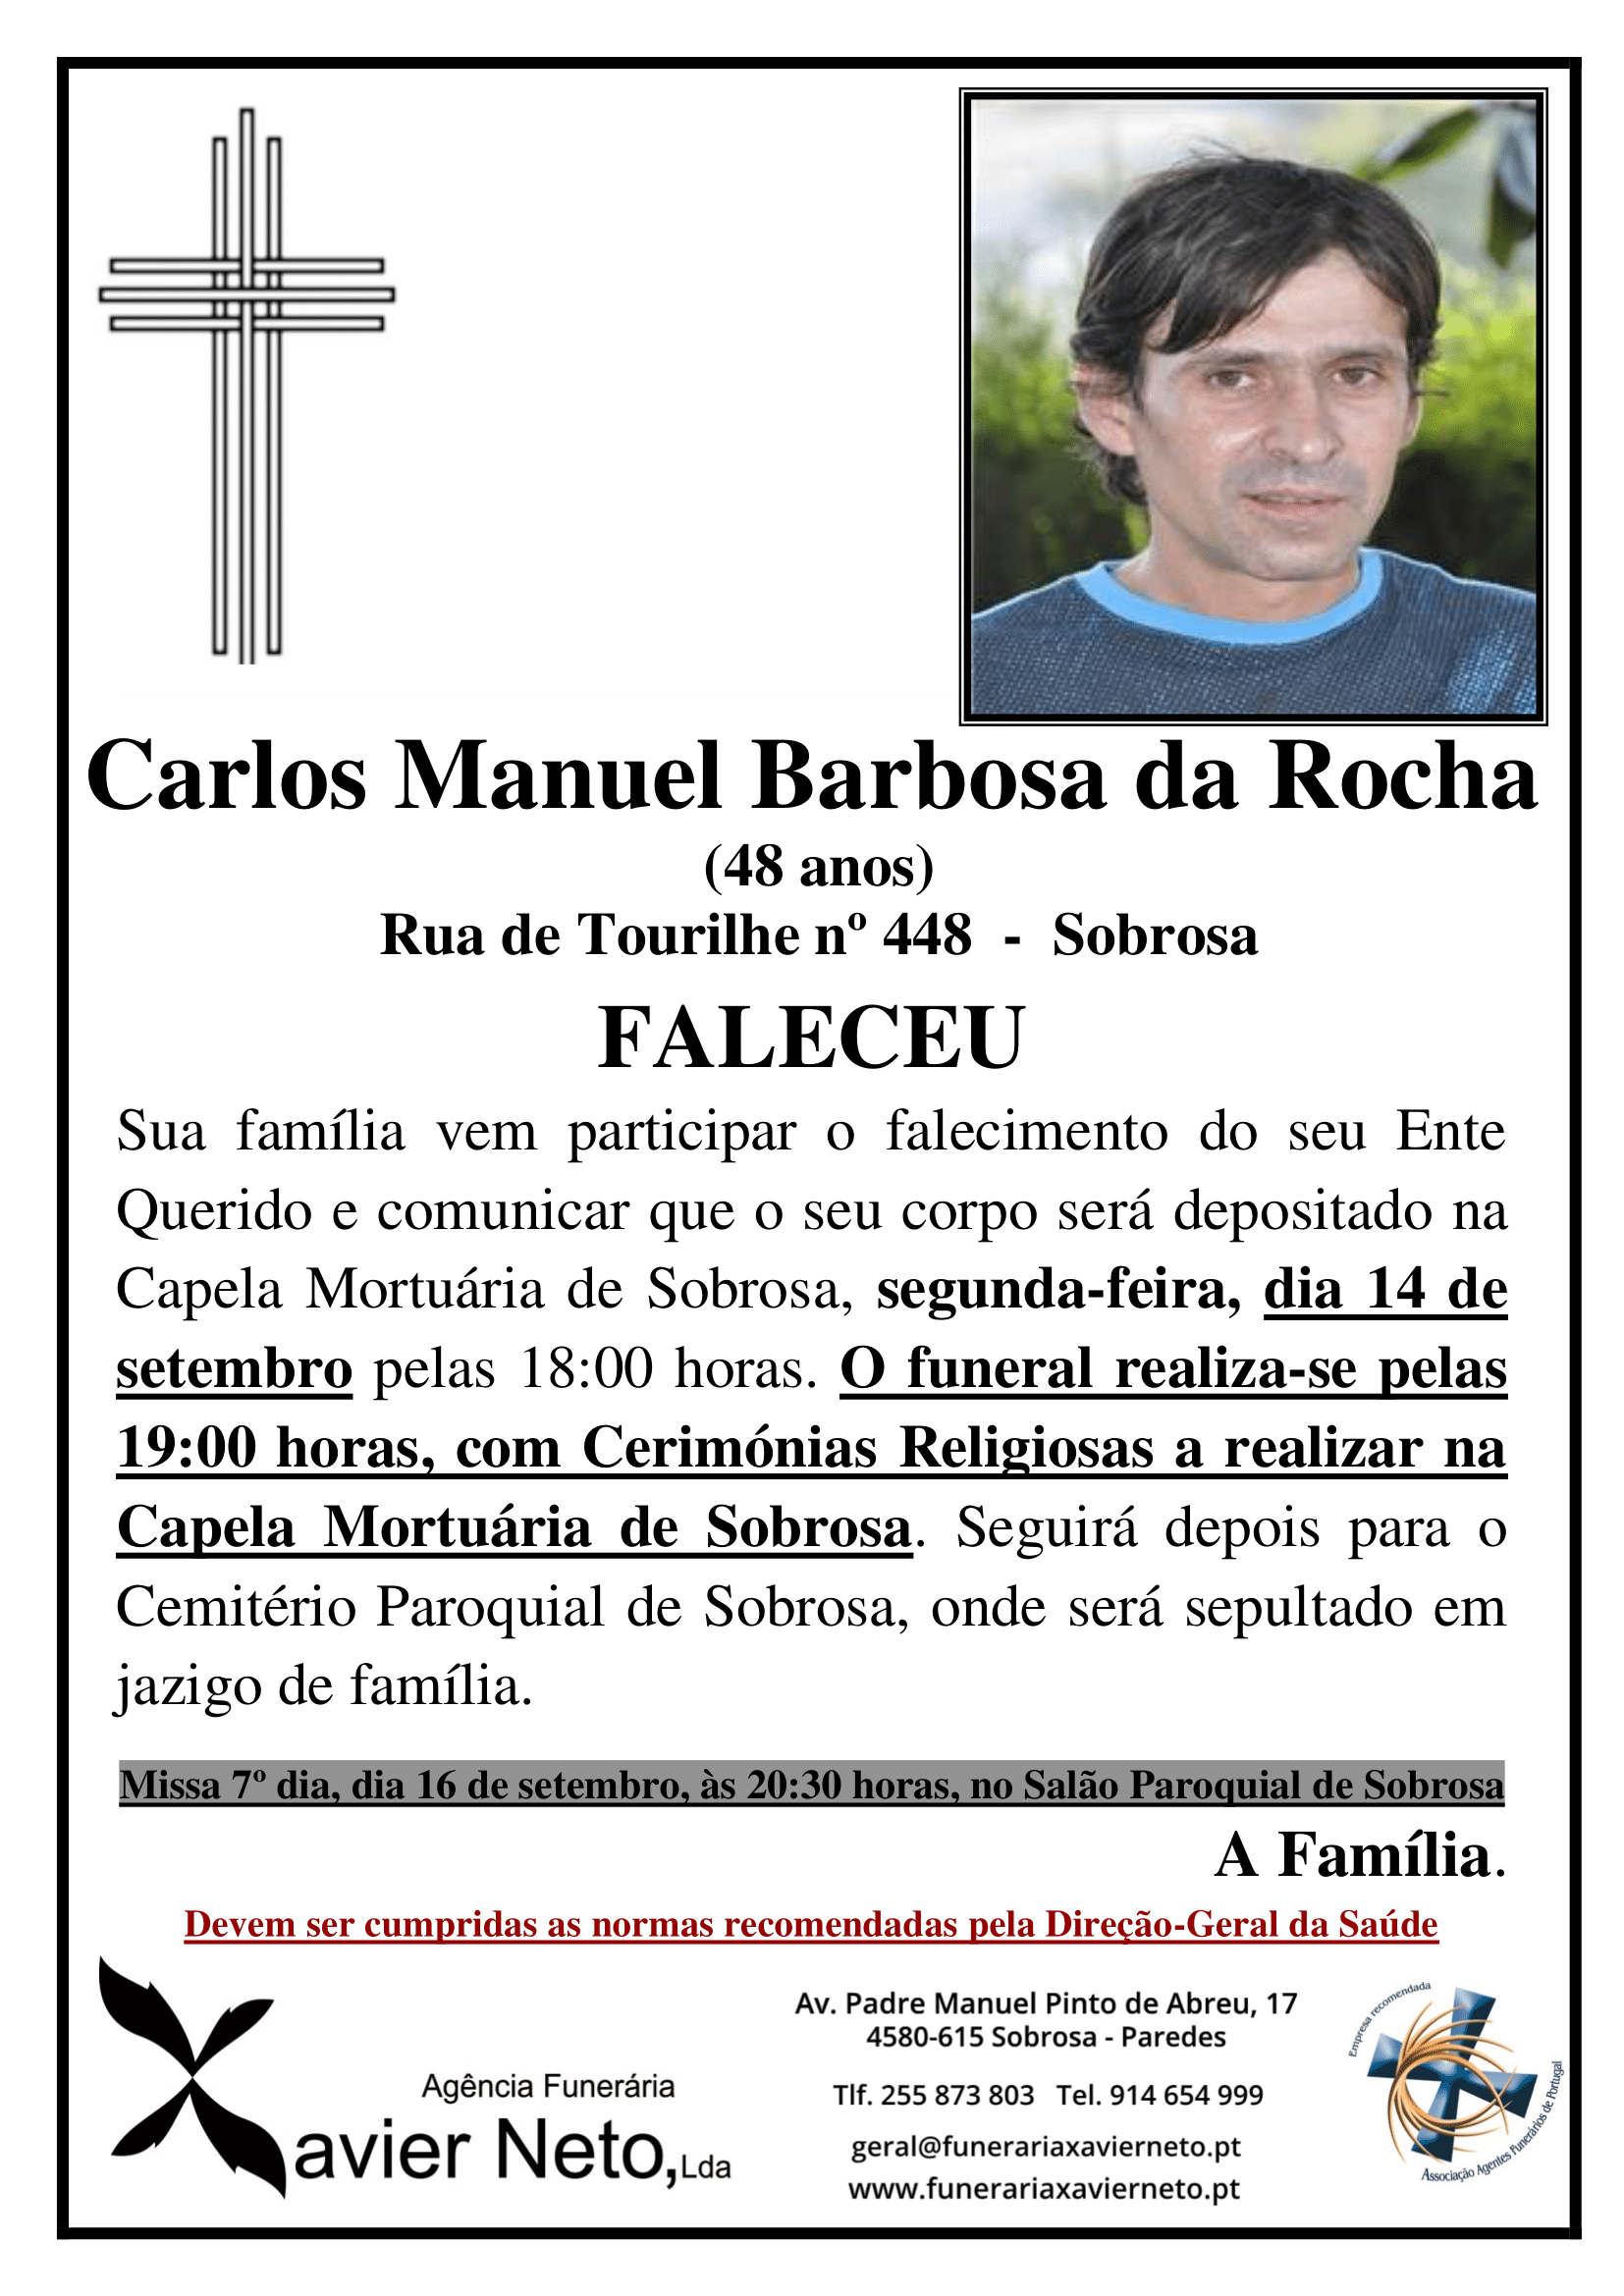 Carlos Manuel Barbosa da Rocha